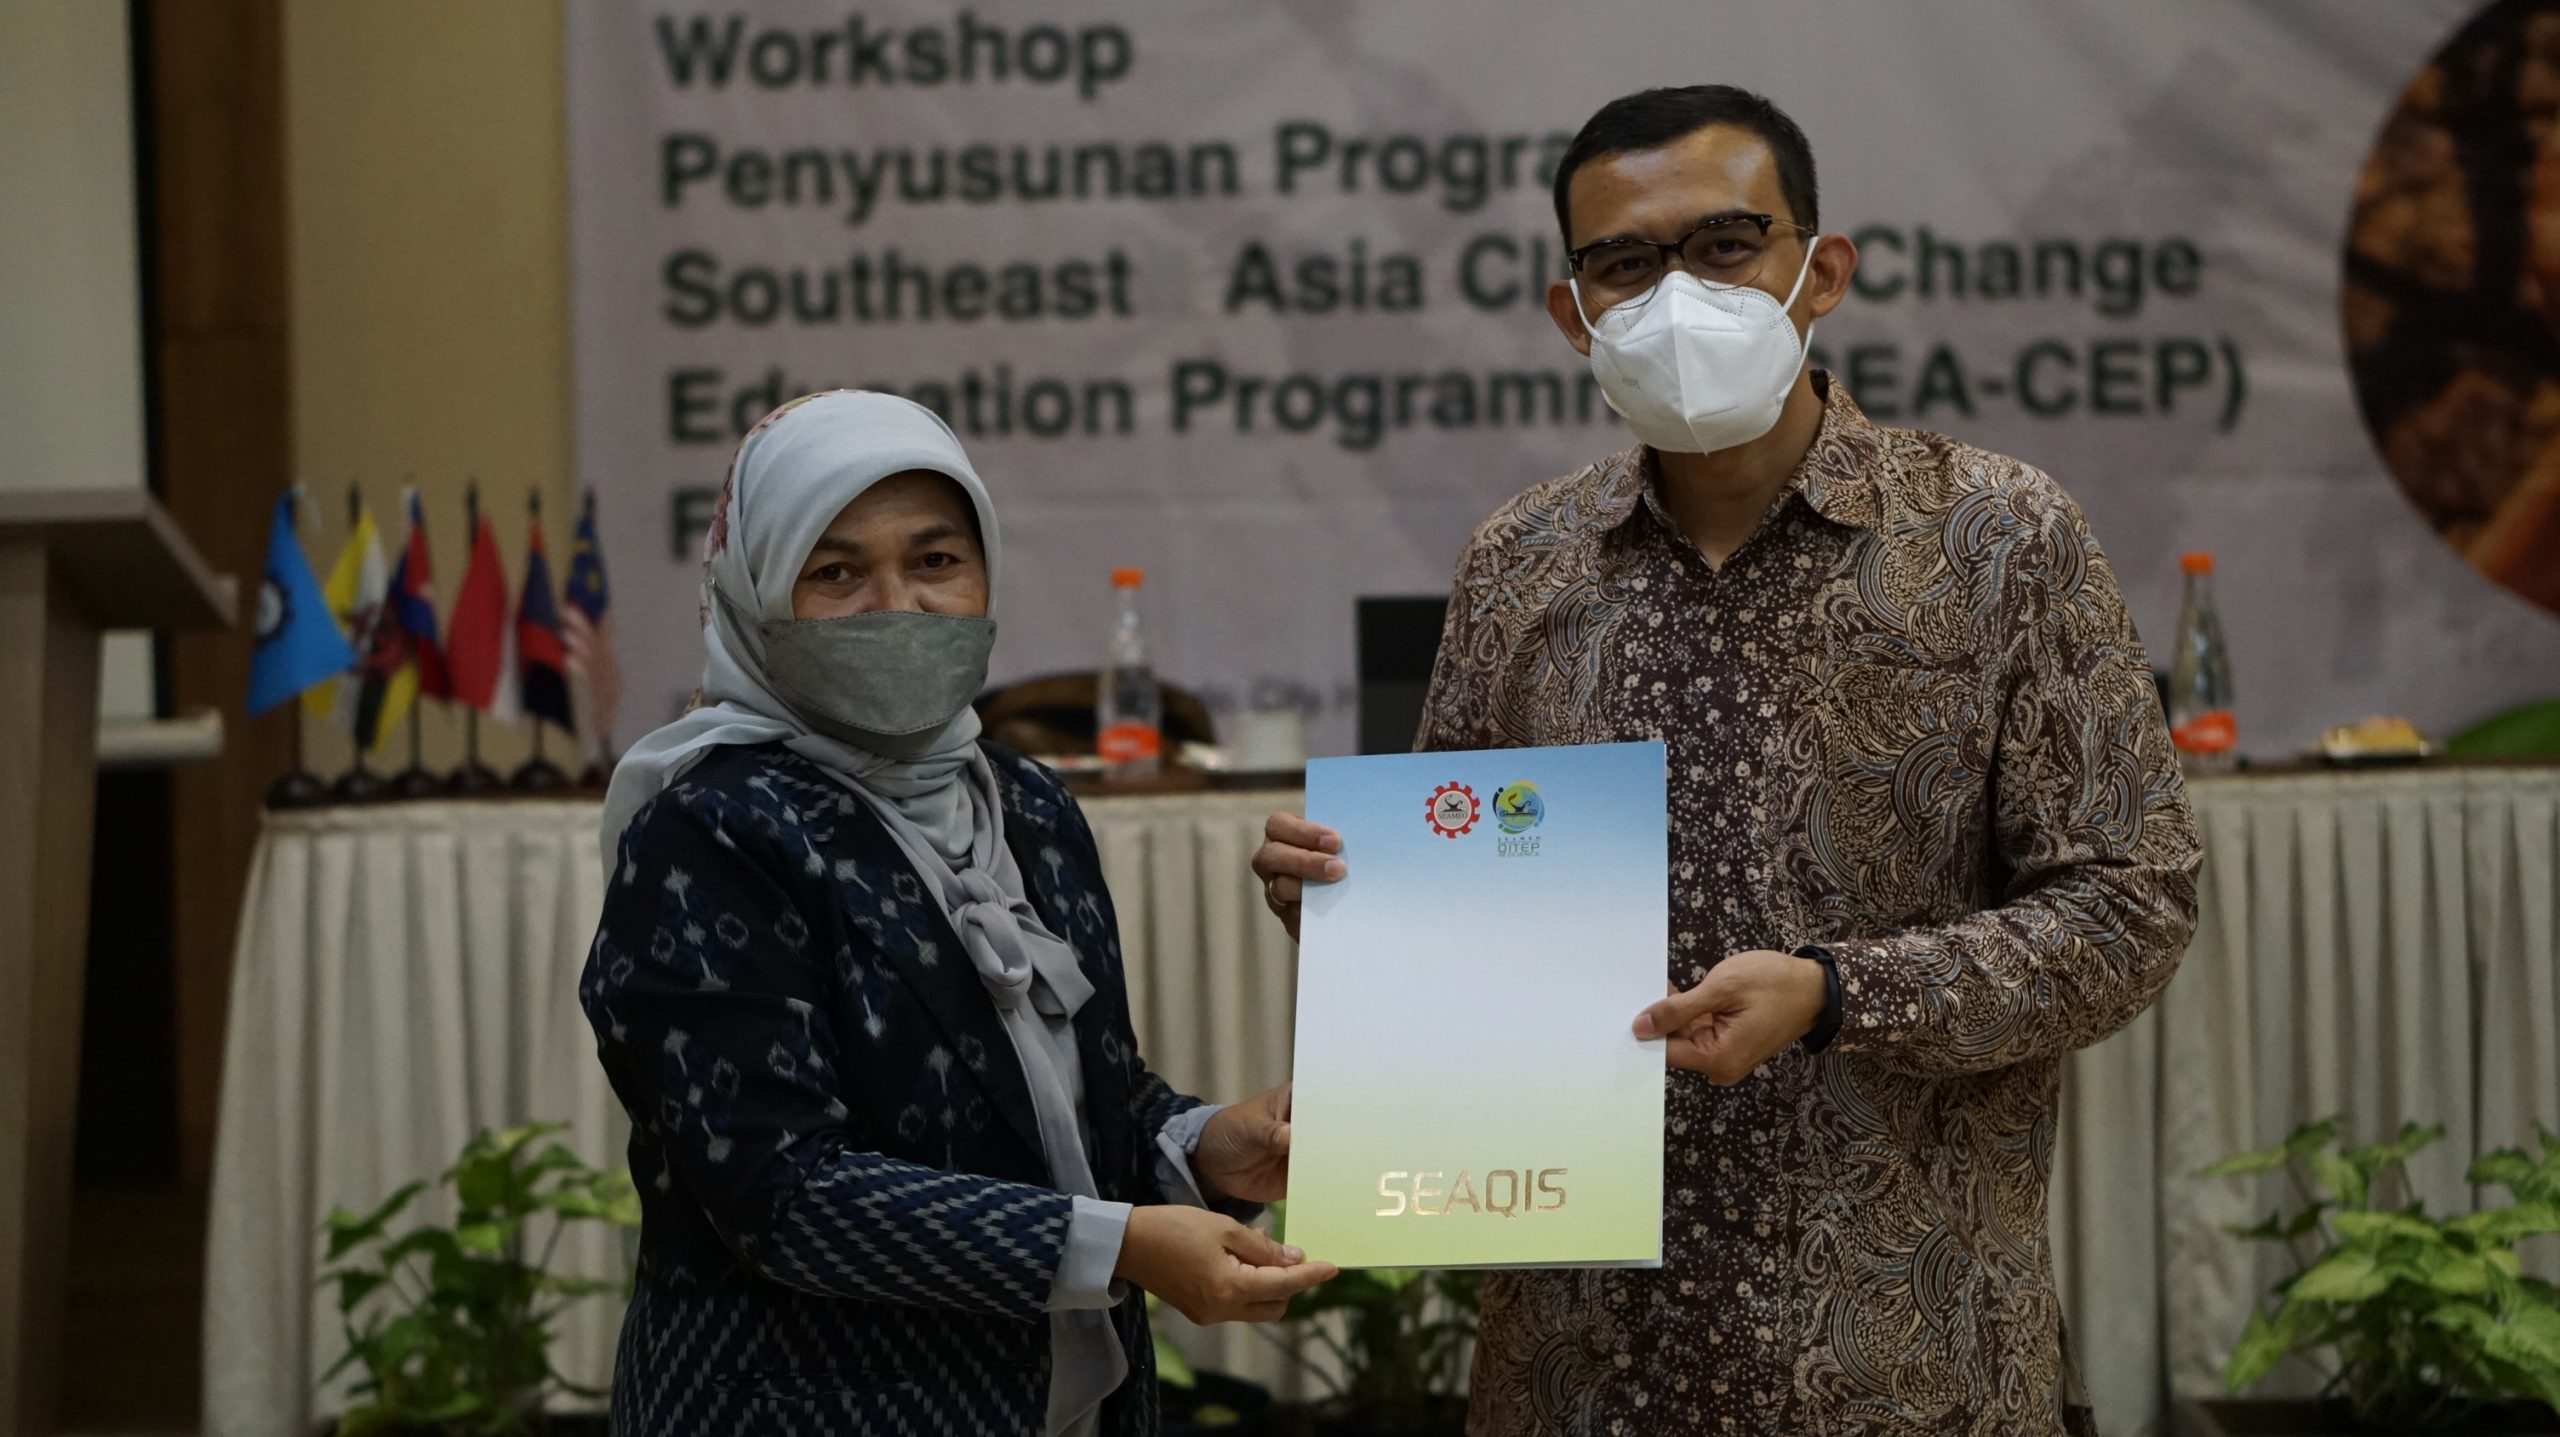 Workshop on Academic Paper Finalisation of Southeast Asia Climate Change Education Programme (SEA-CEP) Development